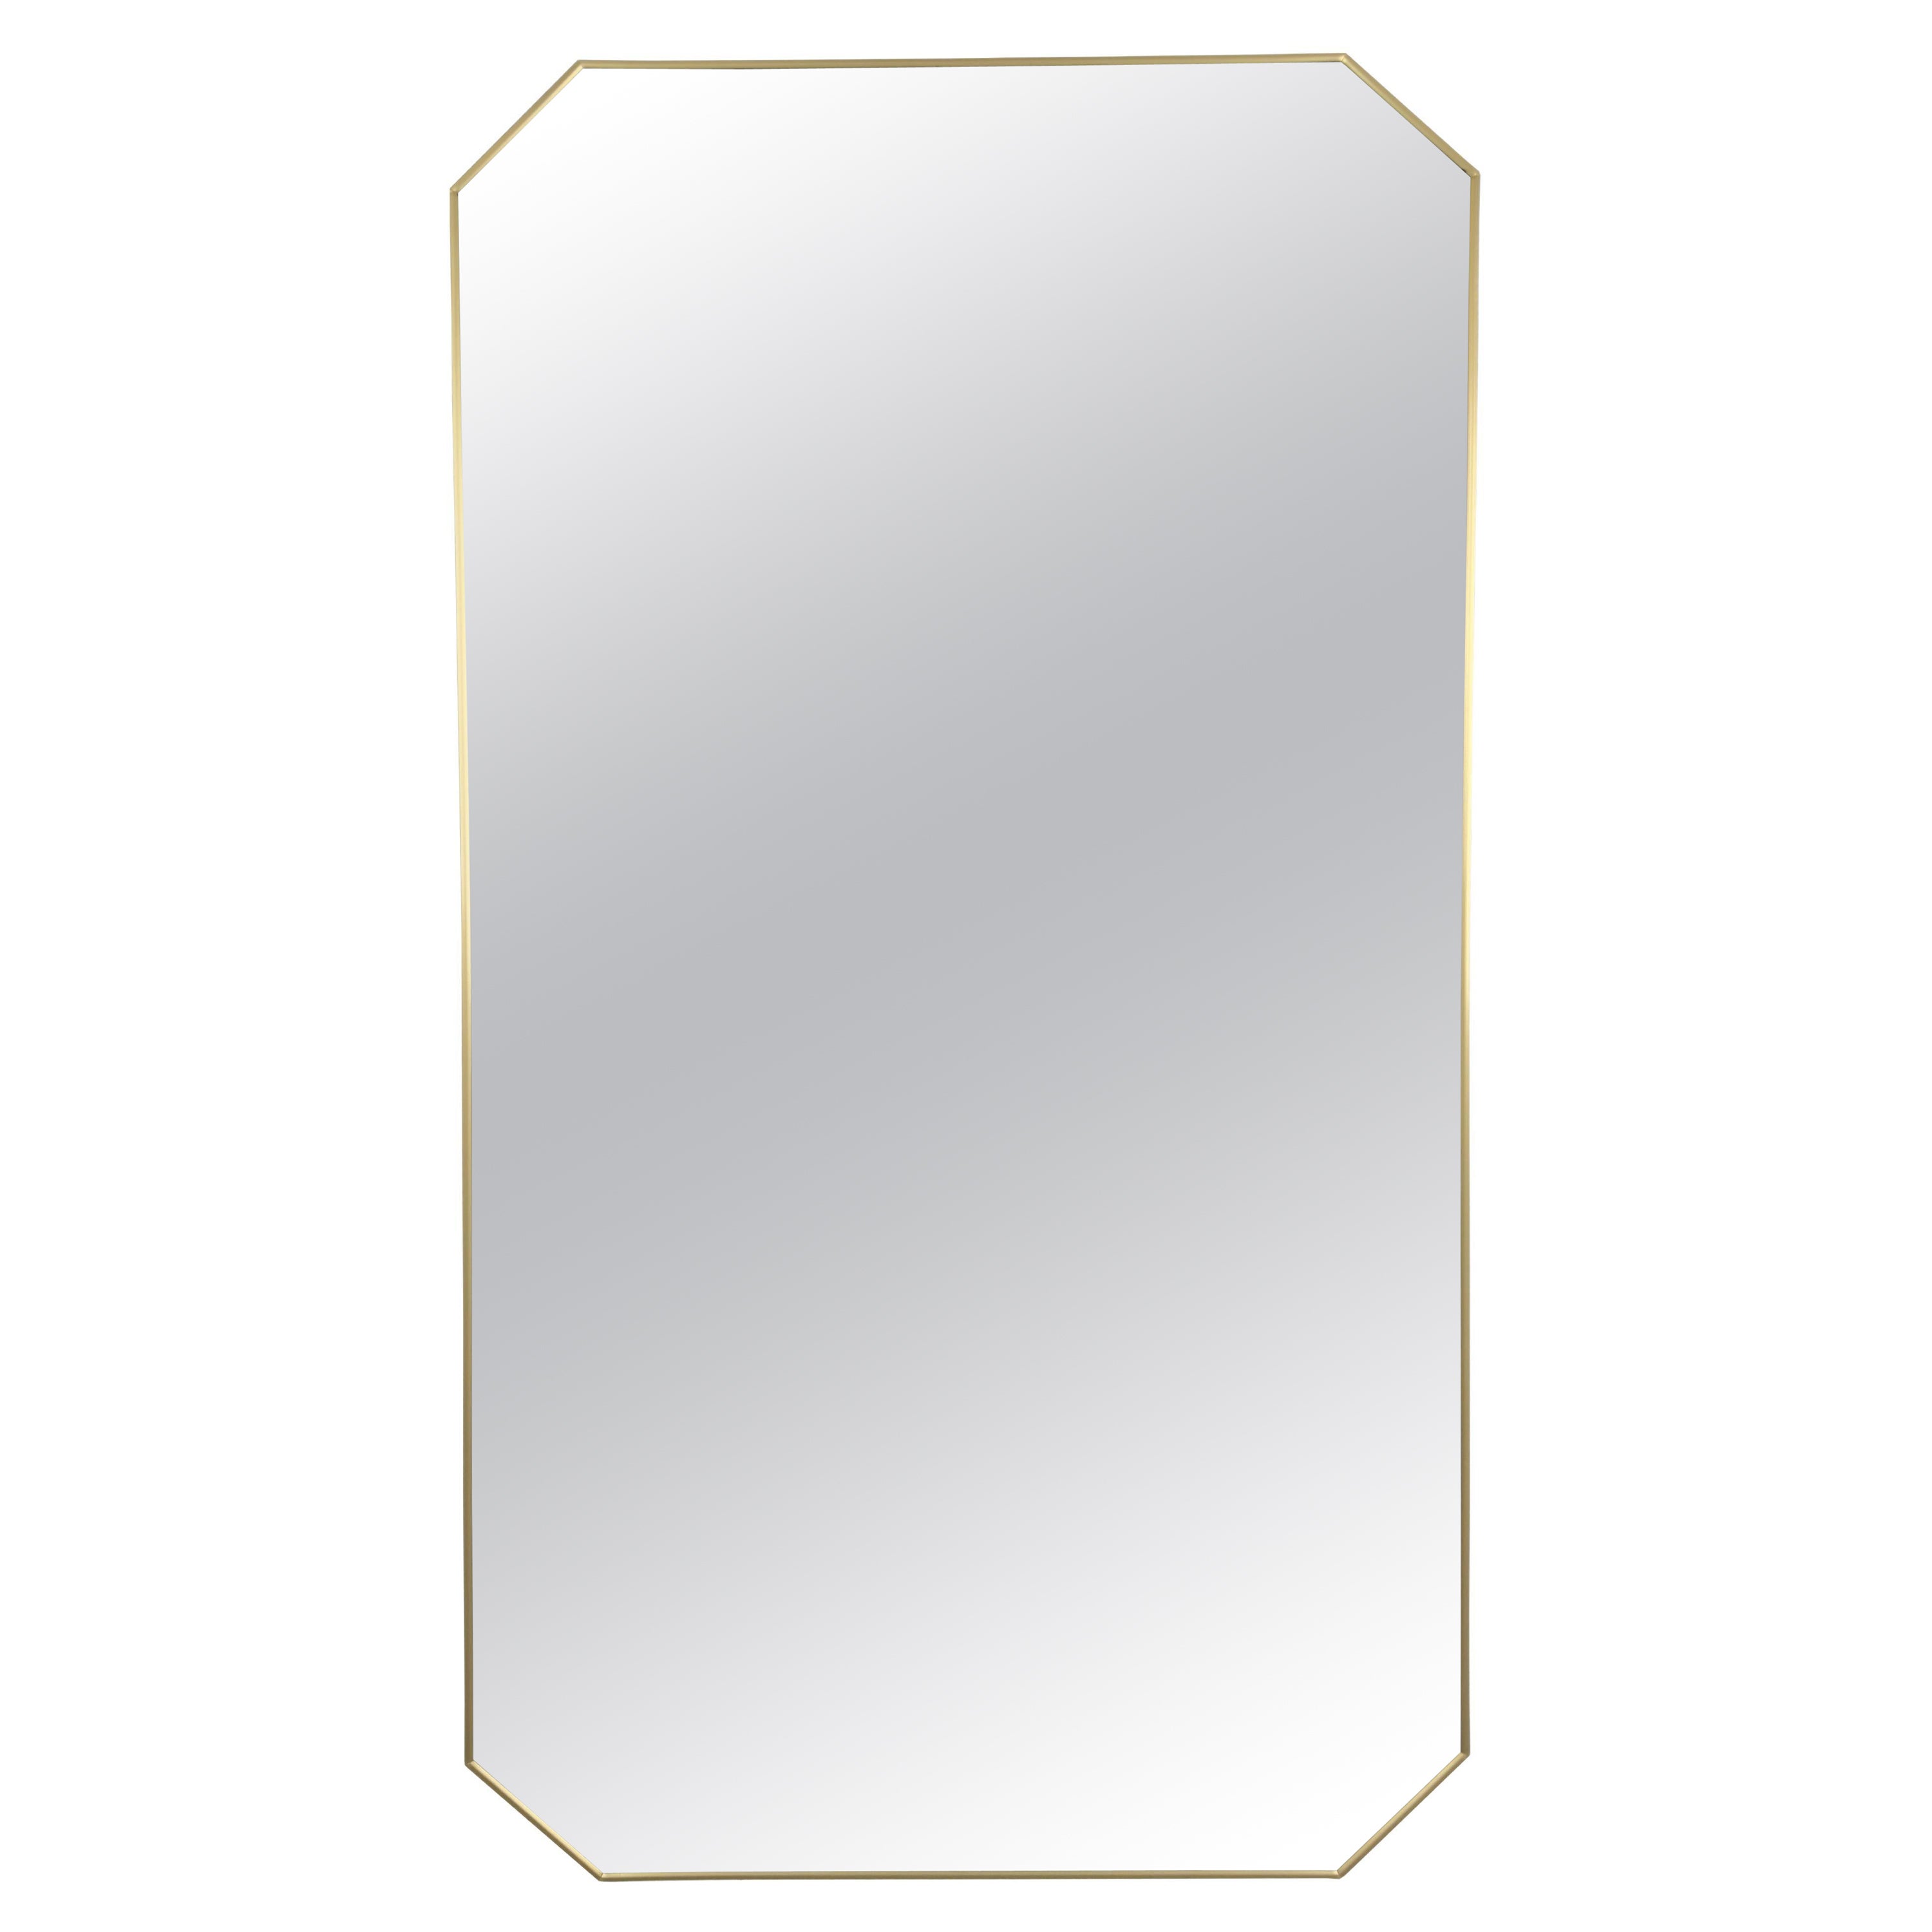 Friedman Brothers Mid Century Modern Style Beveled & Brass Frame Mirror 